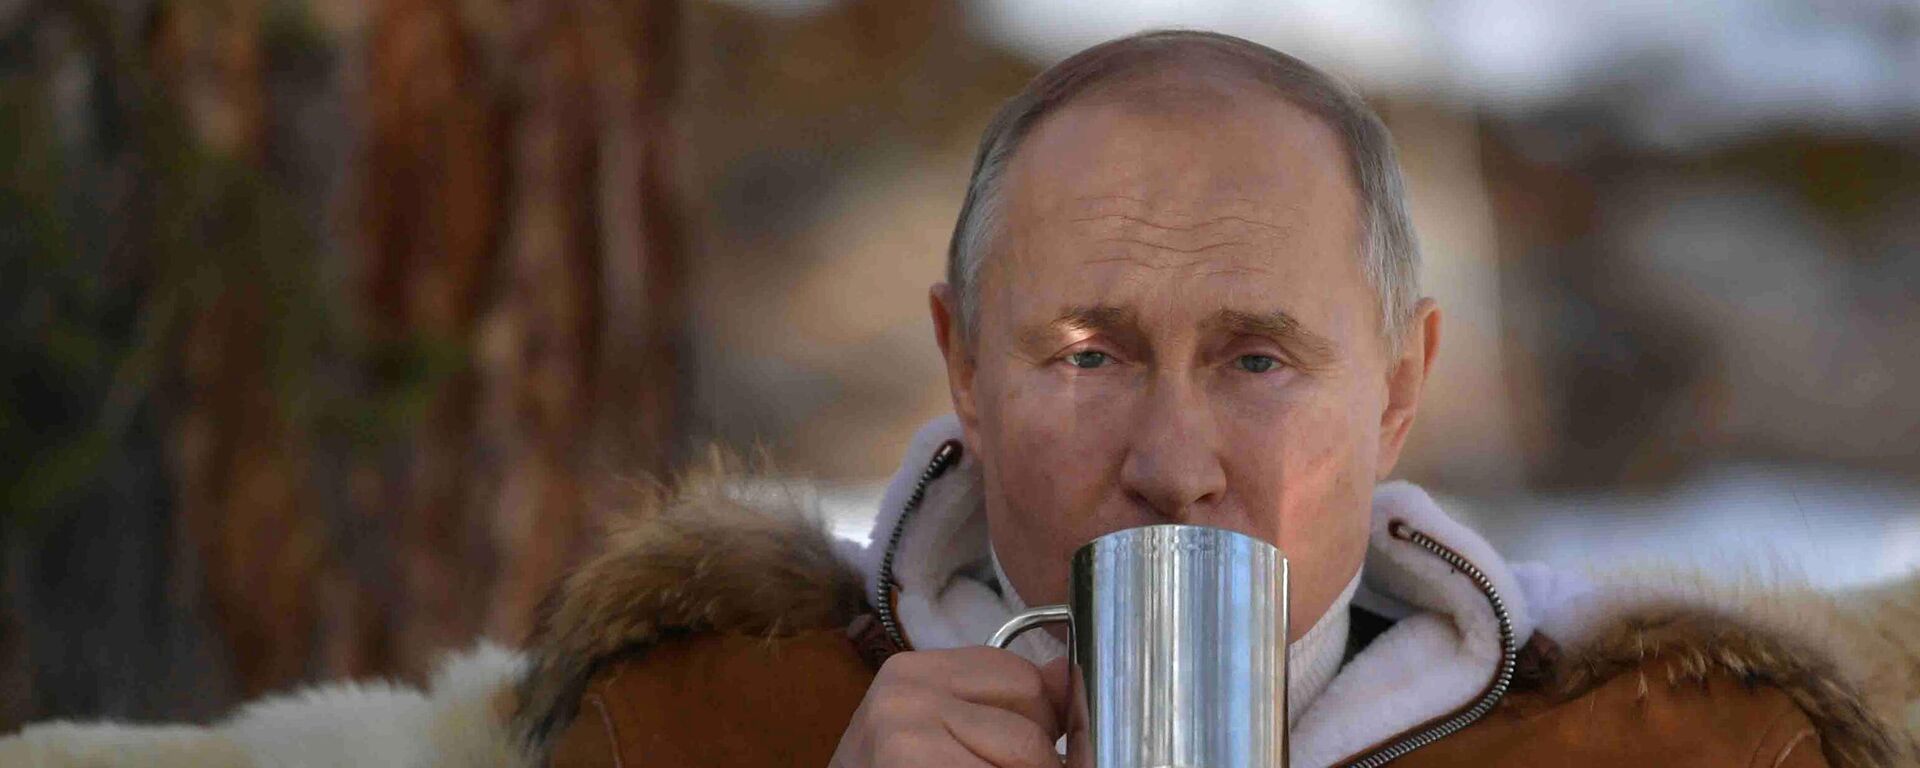 21 марта 2021. Президент РФ Владимир Путин во время отдыха в тайге. - Sputnik Србија, 1920, 27.11.2021